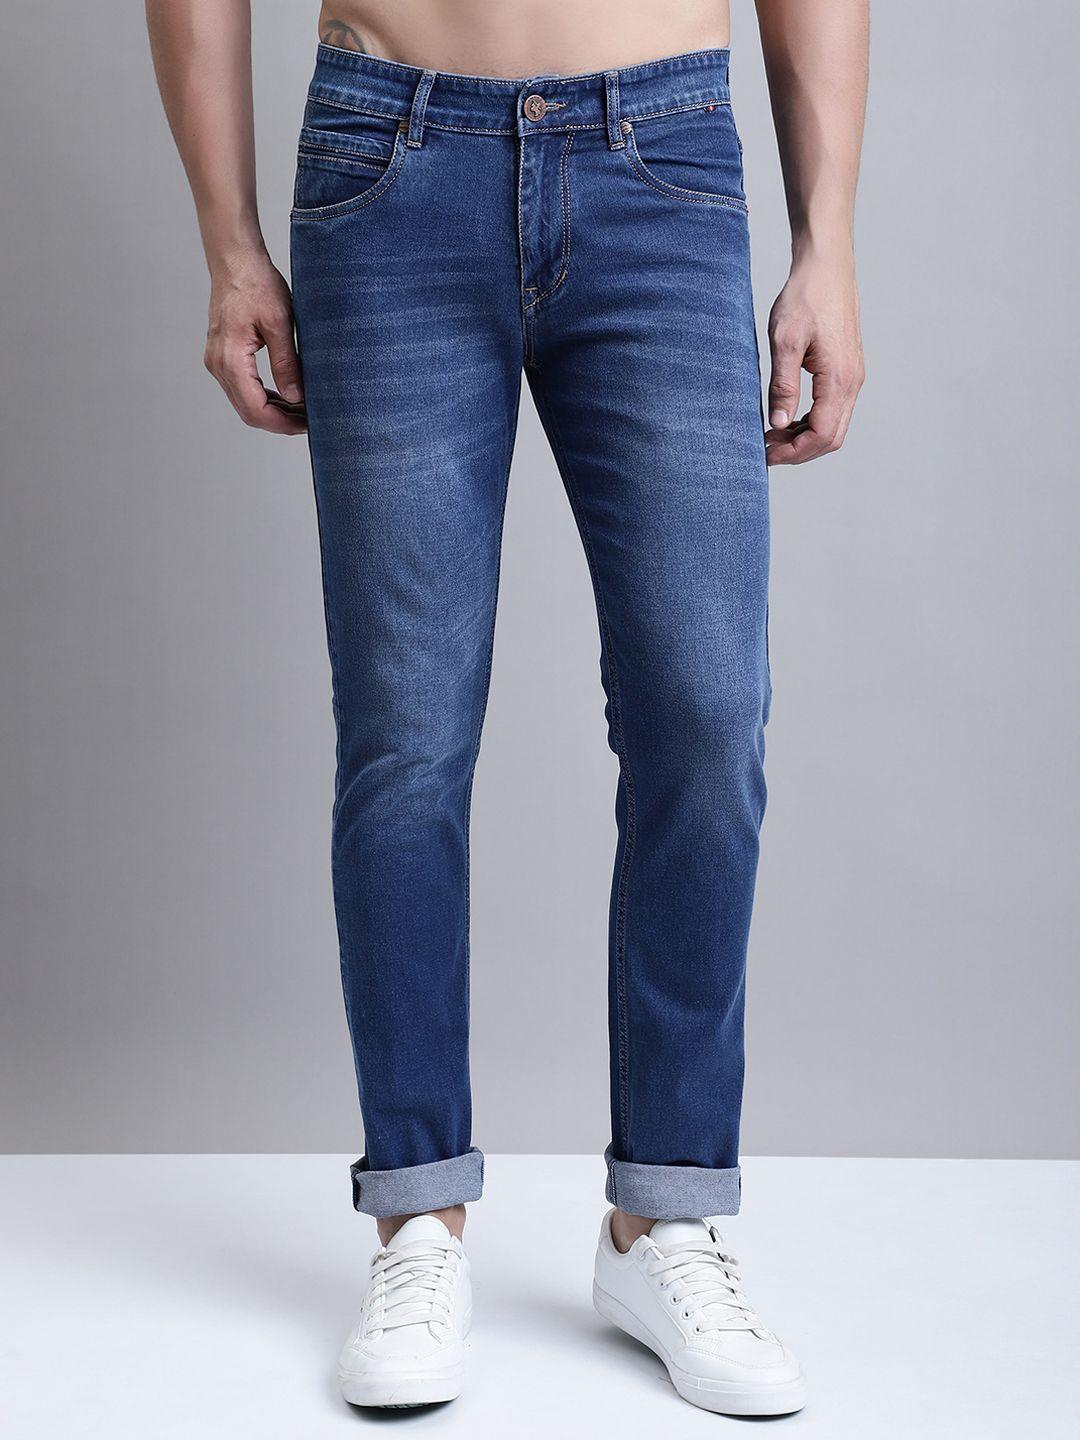 cantabil-men-comfort-light-fade-jeans